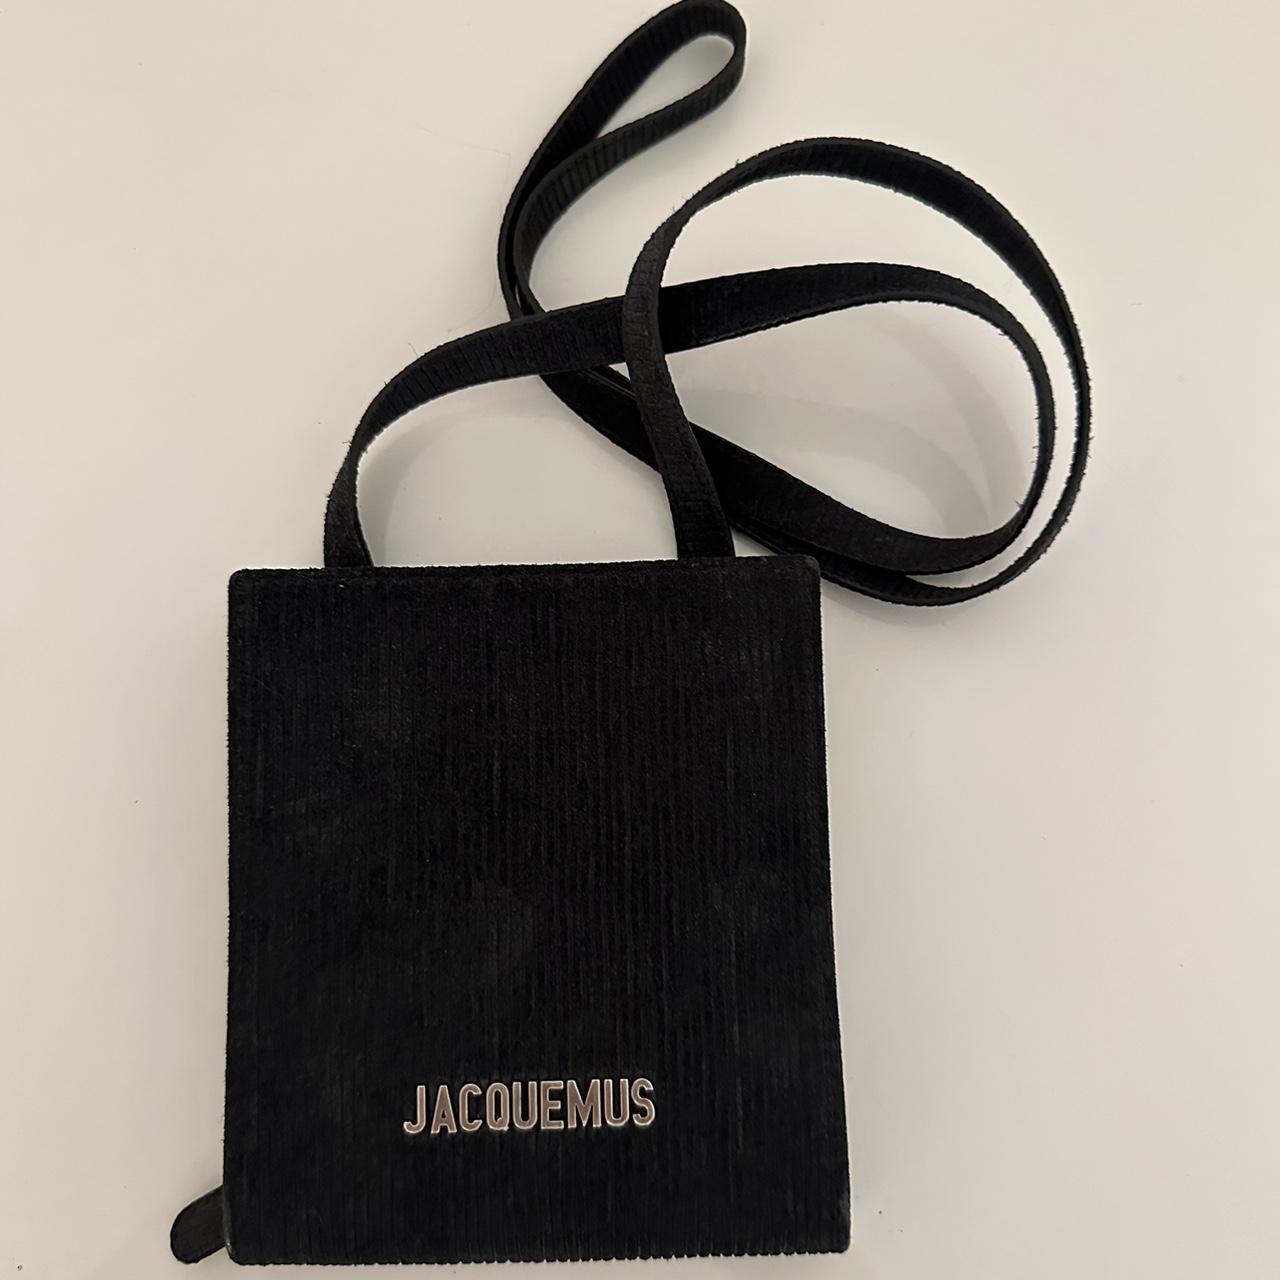 Jacquemus Men's Bag | Depop